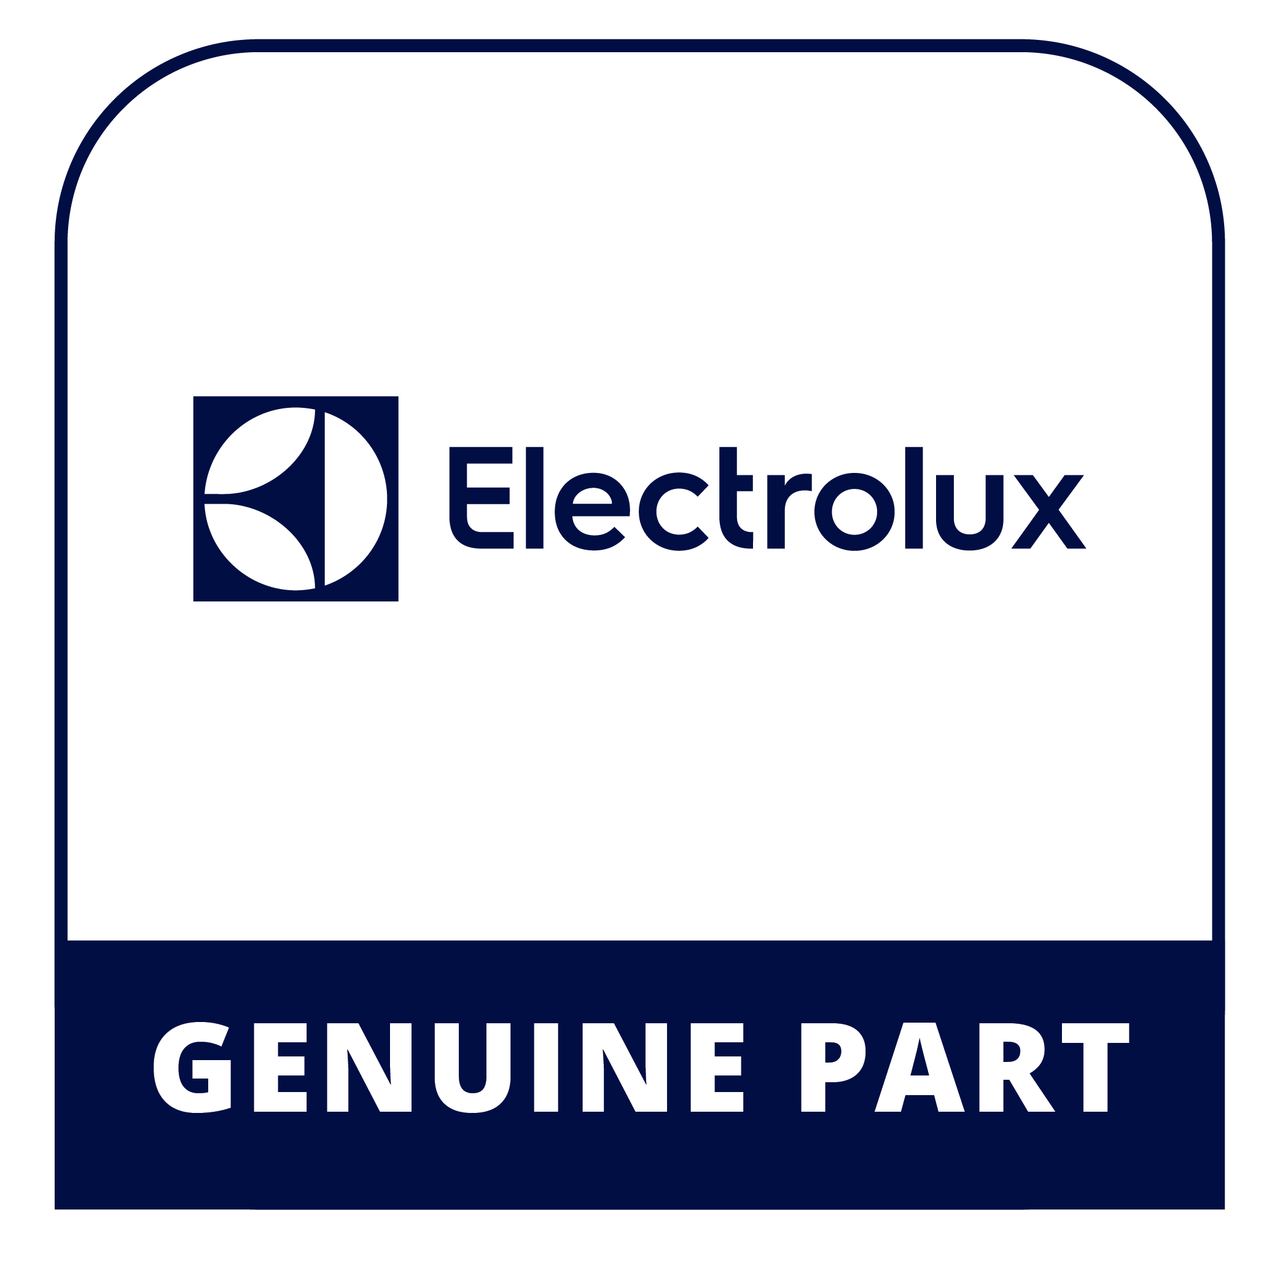 Frigidaire - Electrolux 131660001 Seal - Genuine Electrolux Part